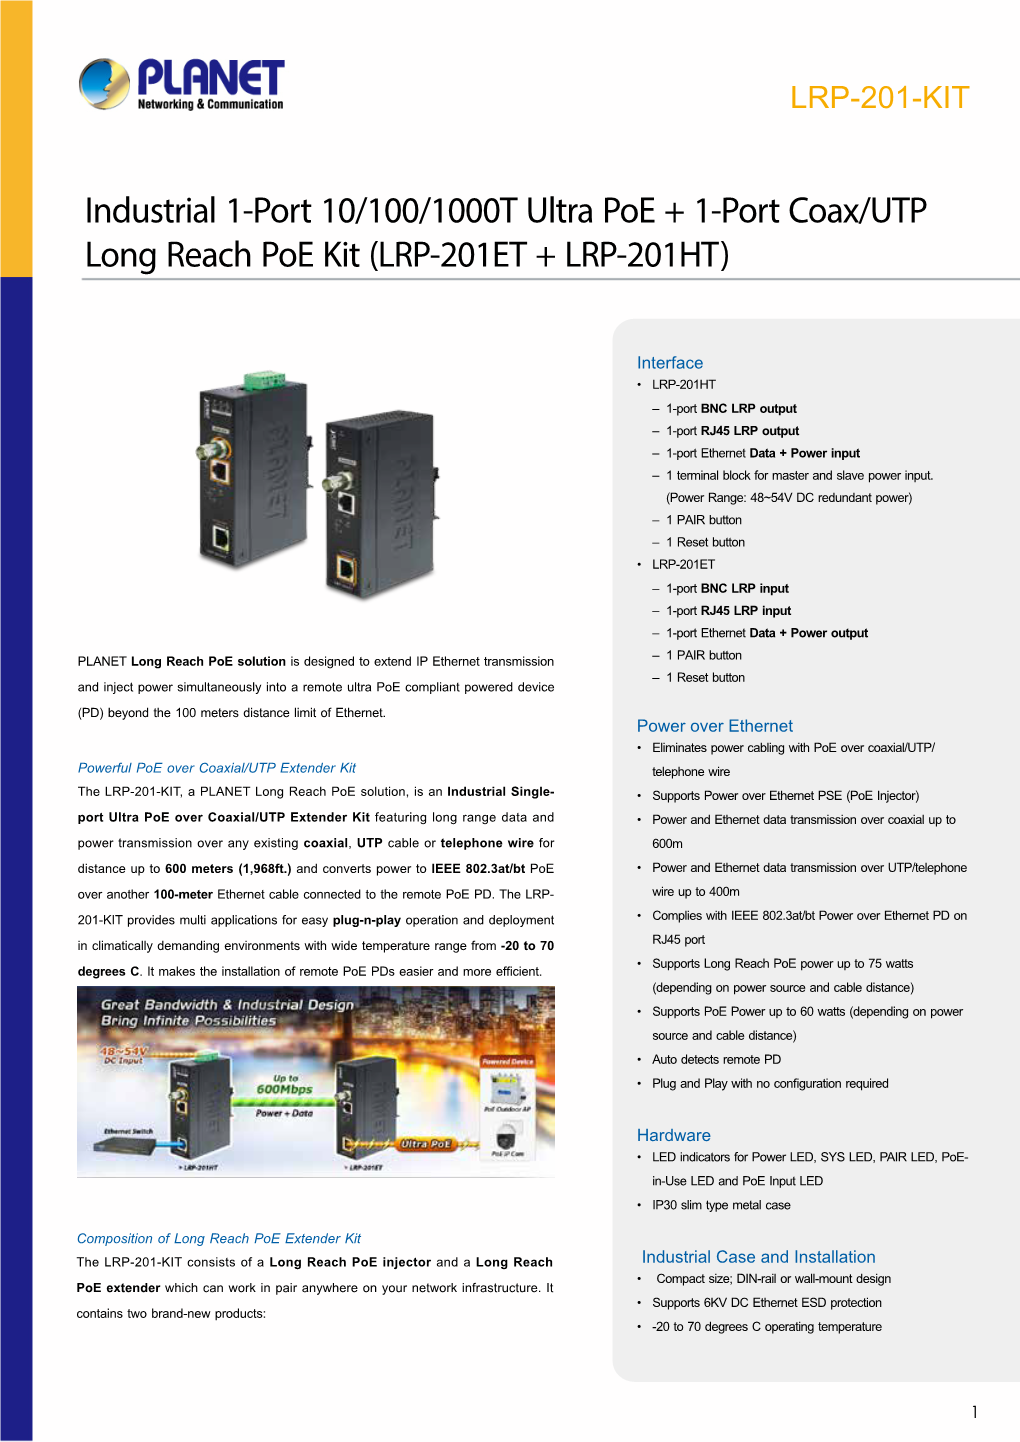 Industrial 1-Port 10/100/1000T Ultra Poe + 1-Port Coax/UTP Long Reach Poe Kit (LRP-201ET + LRP-201HT)